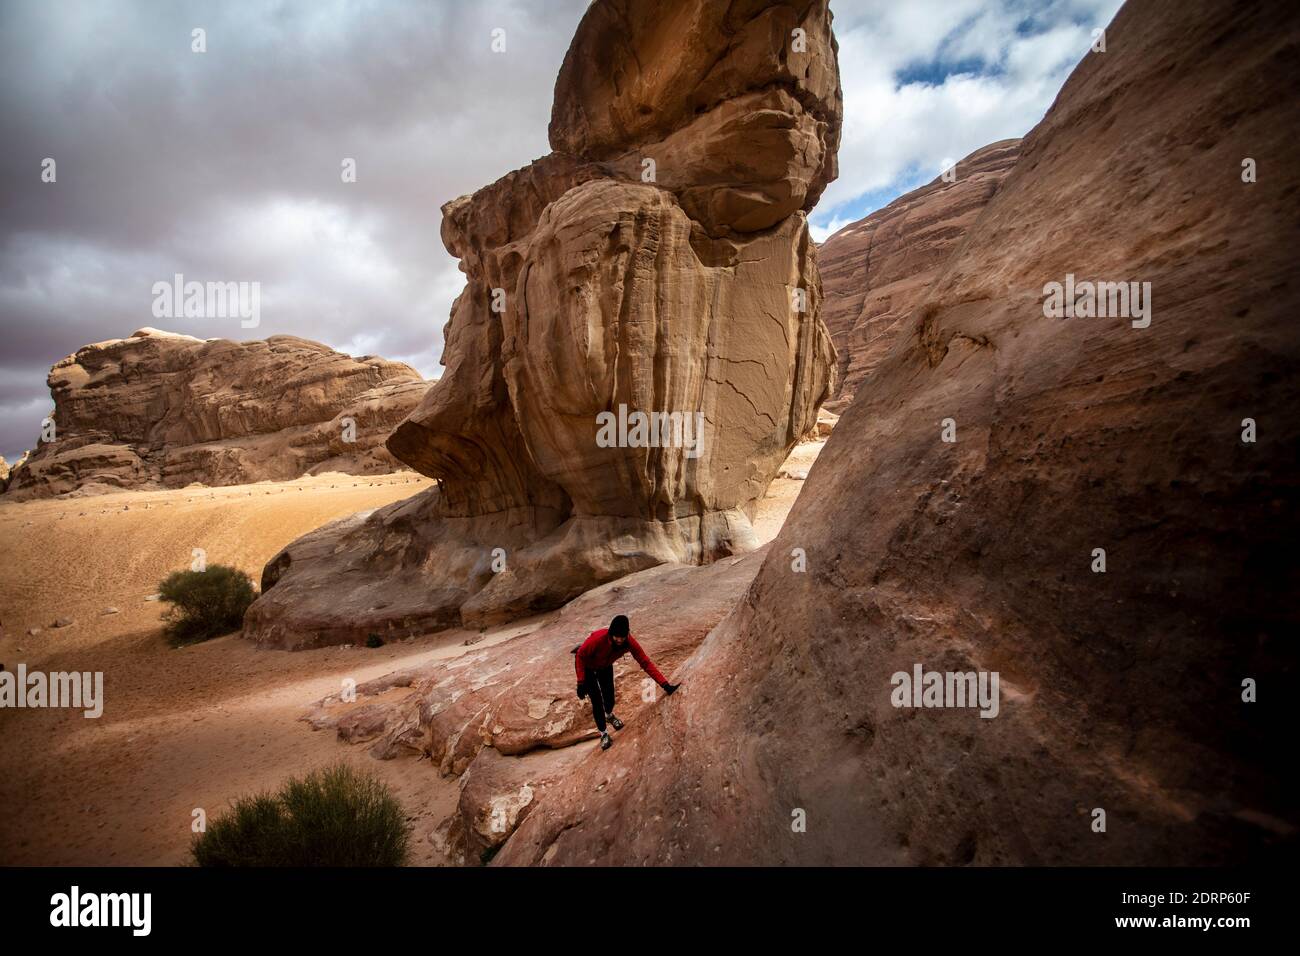 Turist doing trekking in Wadi Rum Desert, Jordan, feb 2020, few weeks before the global lockdown. Stock Photo